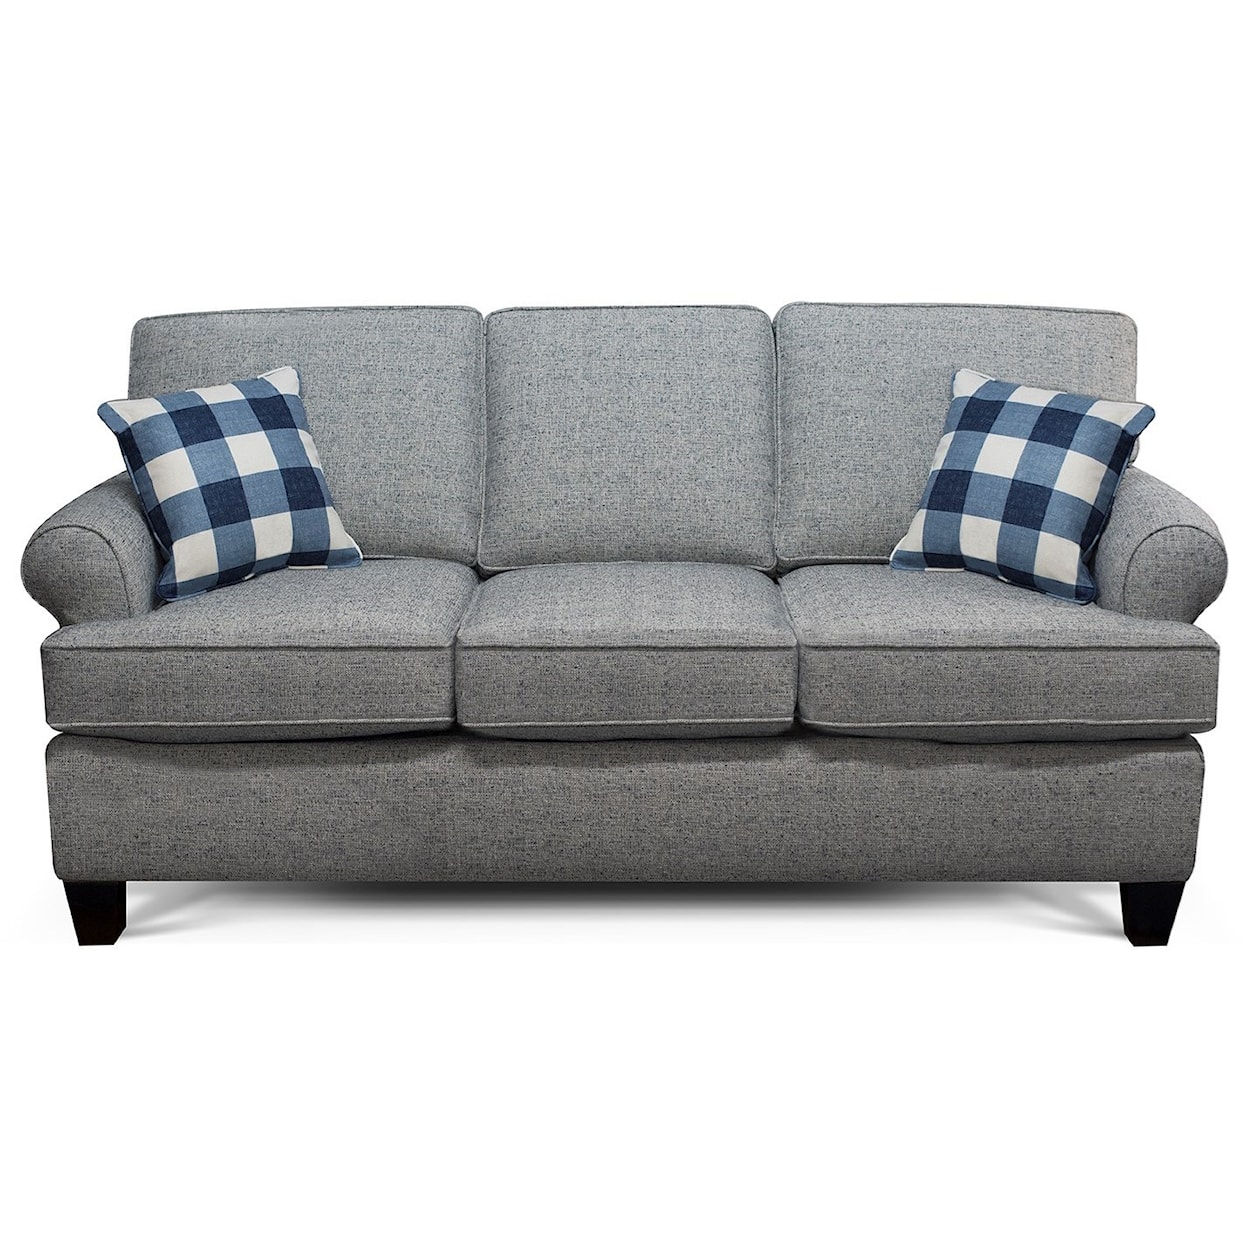 England 5380 Series Sofa